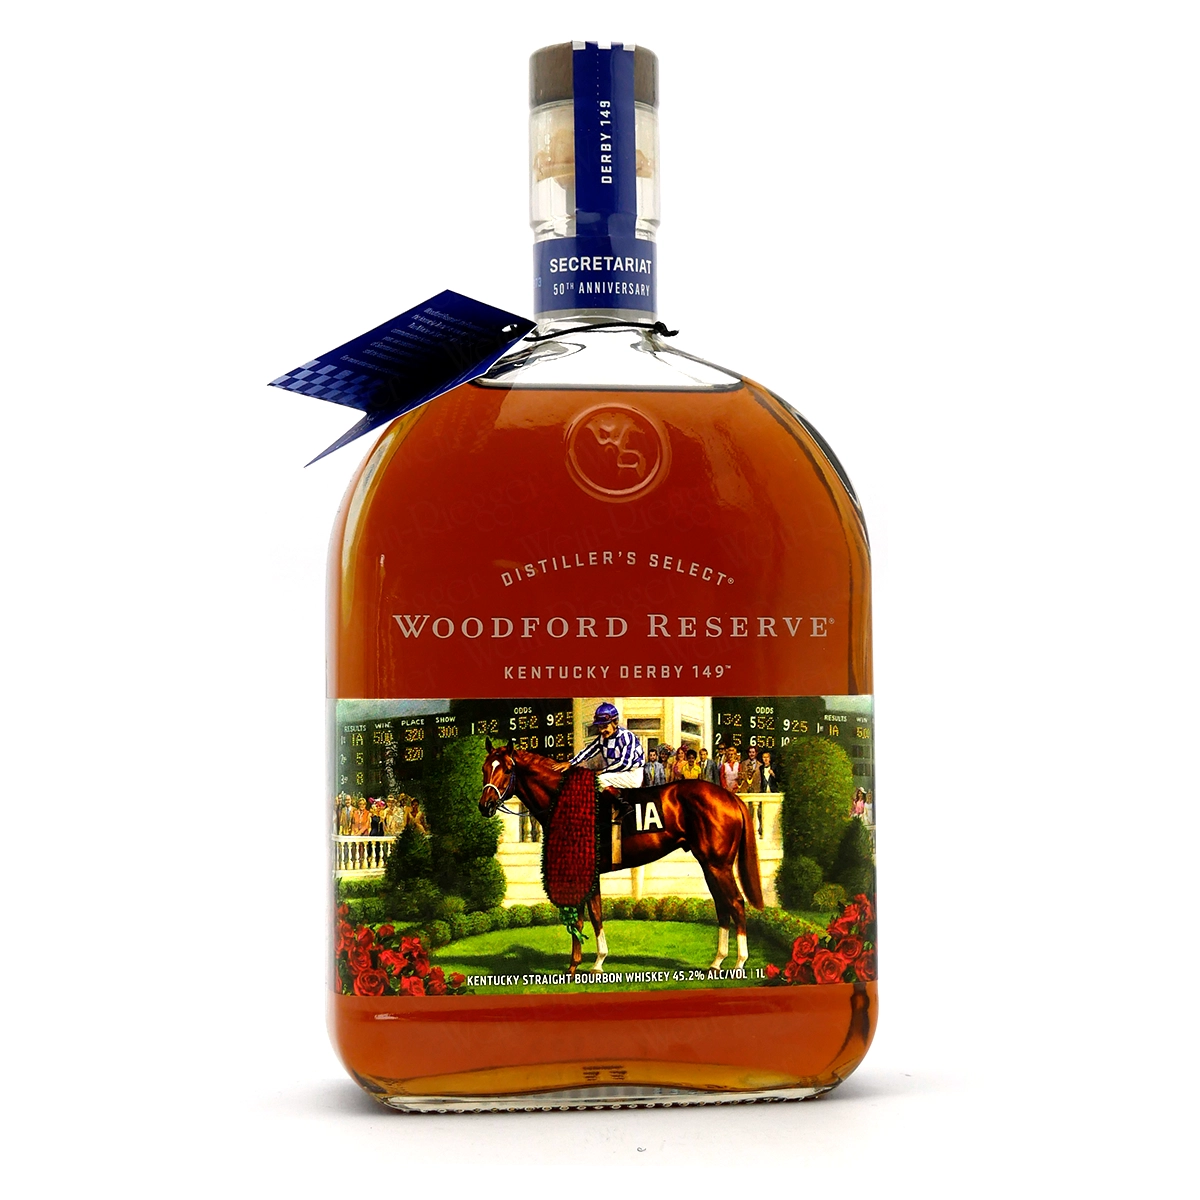 Woodford Reserve SECRETARIAT Kentucky Derby 149 Straight Bourbon Whiskey